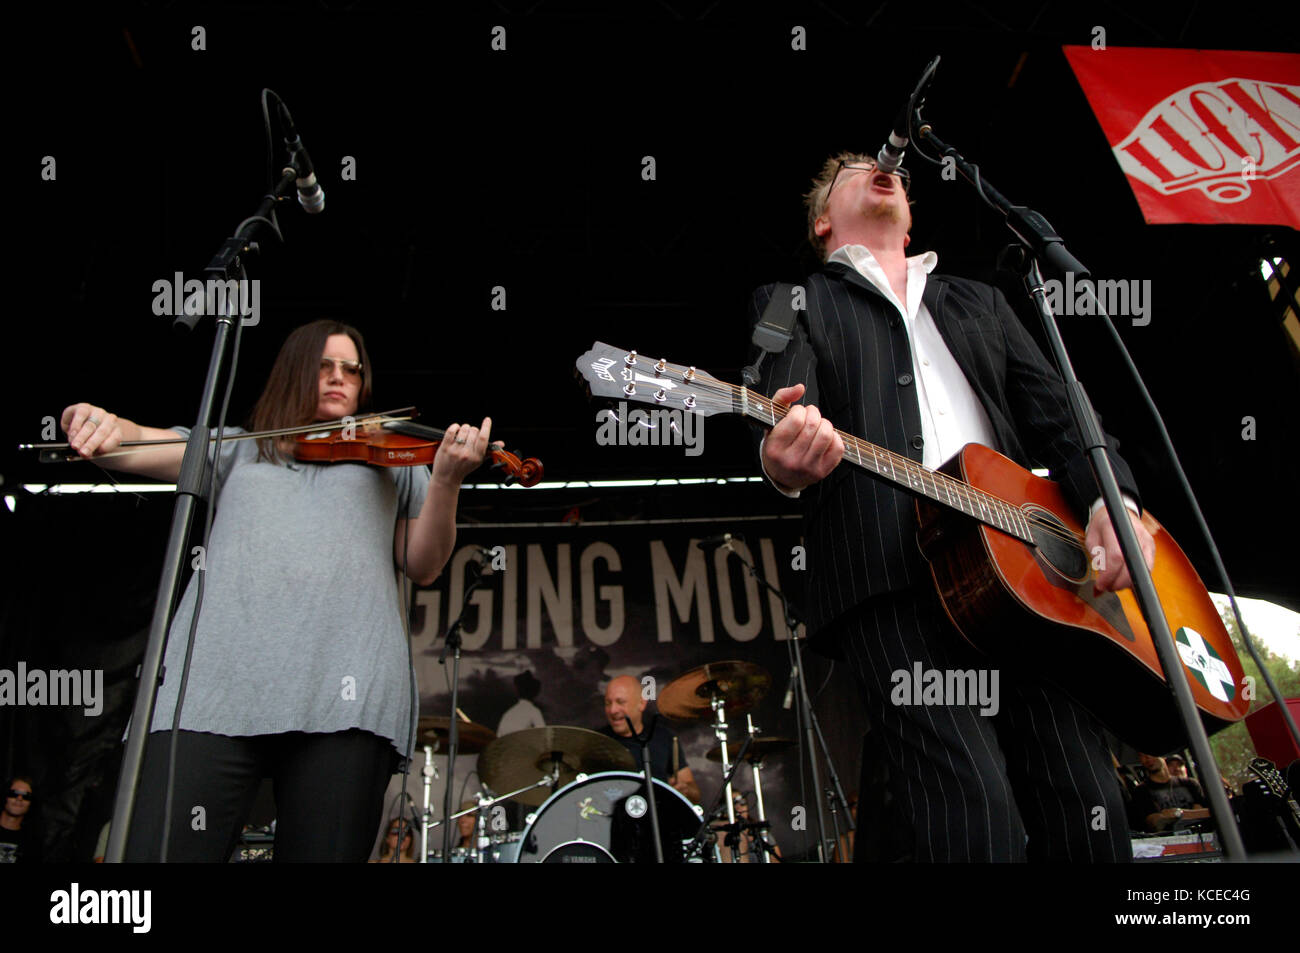 (L-R) Bridget Regan, George Schwindt, Dave King of Flogging Molly si esibisce al 2007 Vans Warped Tour presso l'anfiteatro Coors di Chula Vista, CA Foto Stock